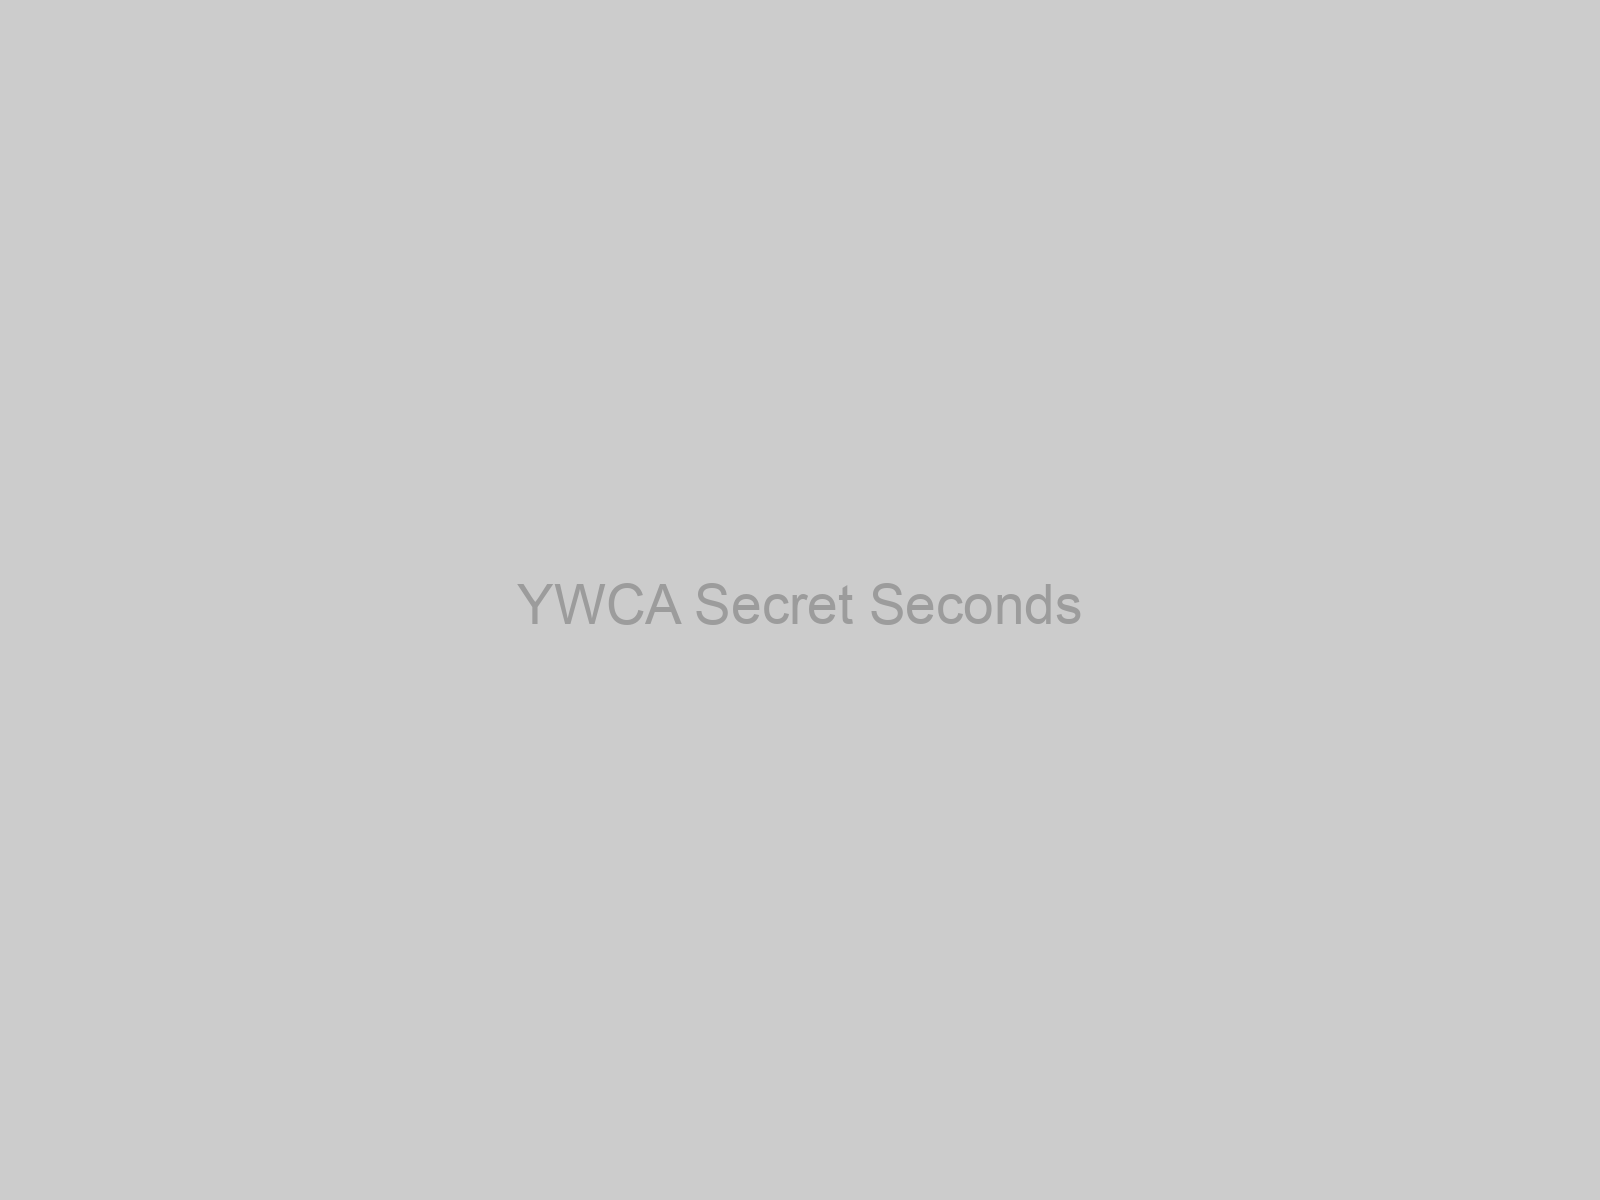 YWCA Secret Seconds